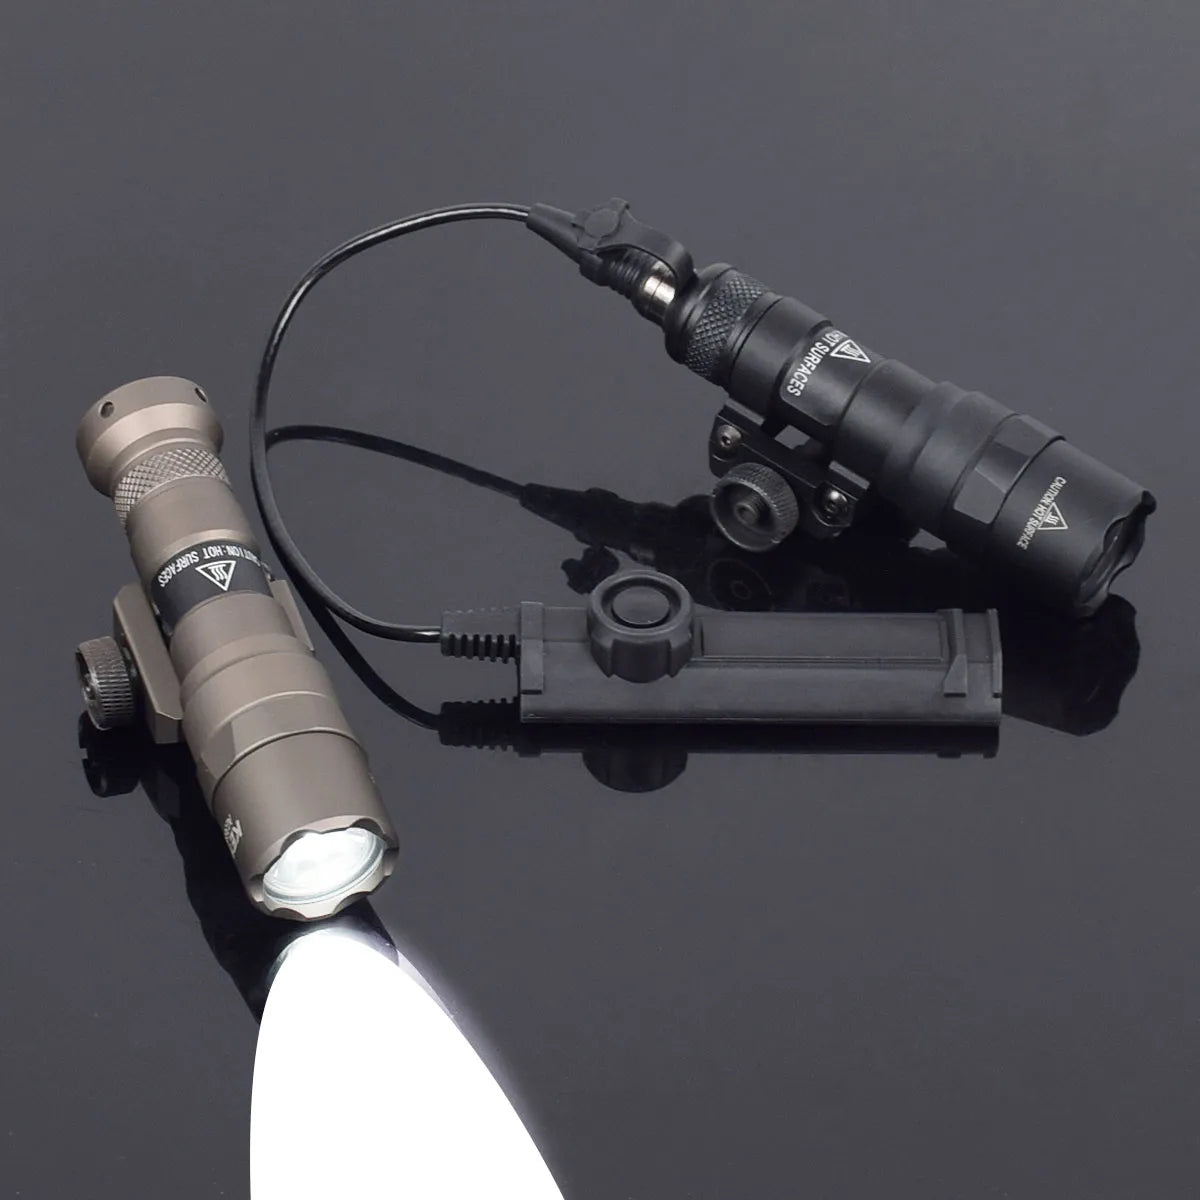 Tactical Surefir M300 M300A MINI Pistol Scout Light Rifle Hunting LED Flashlight Military Weapon Gun Light Arme Lanterna torch